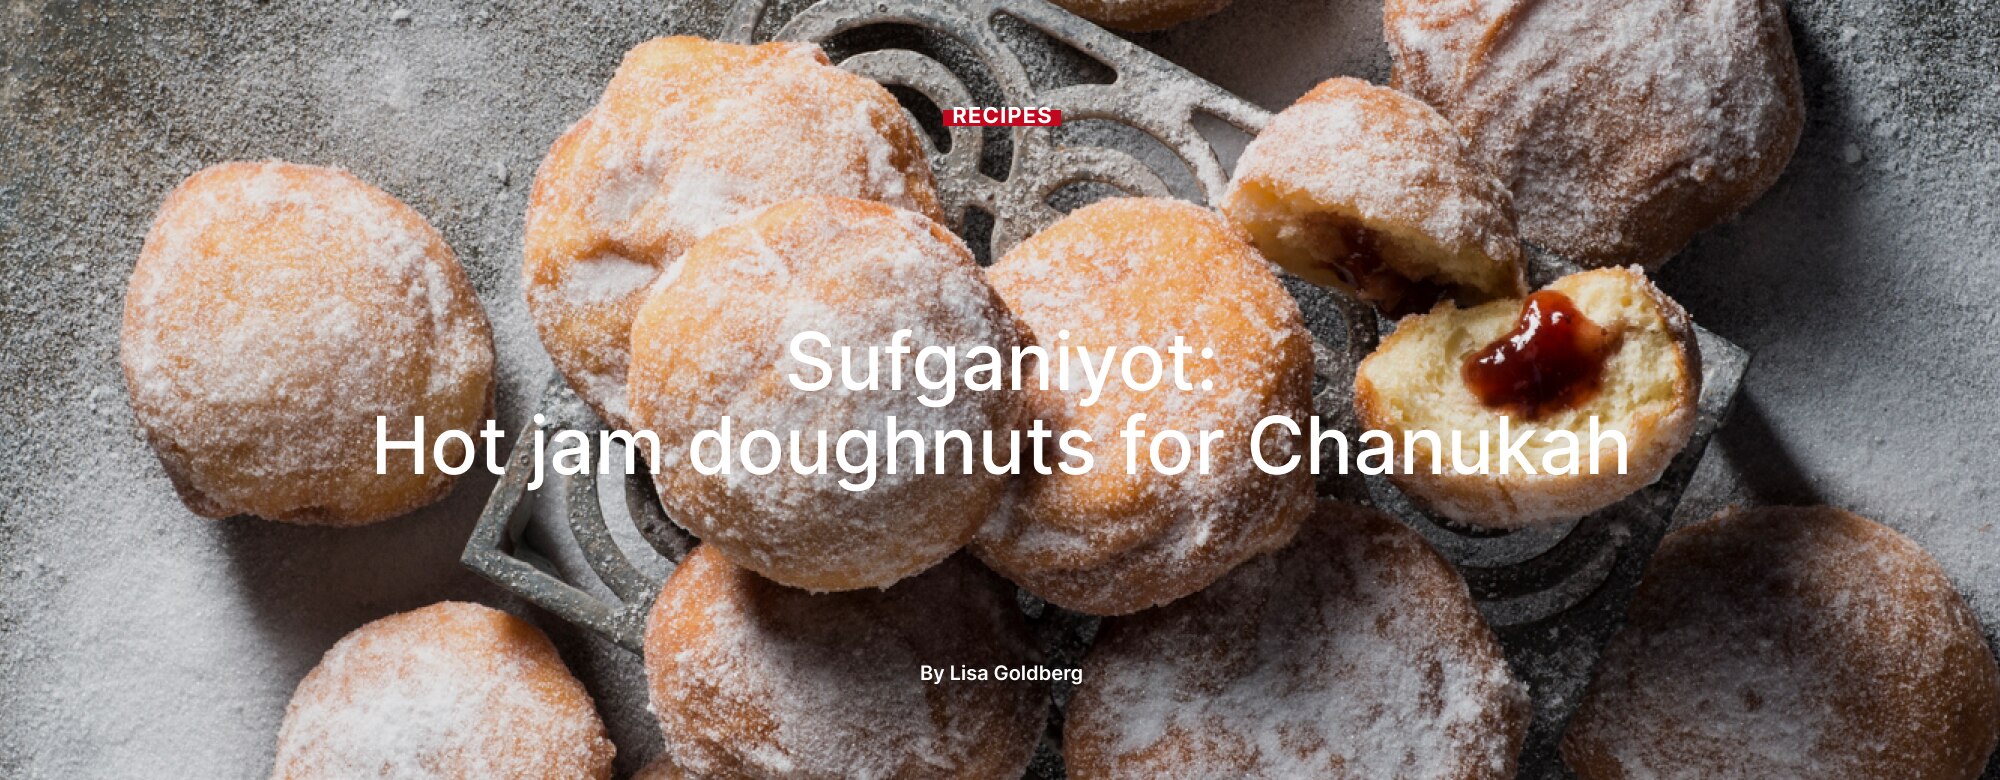 Sufganiyot: Hot jam doughnuts for Chanukah